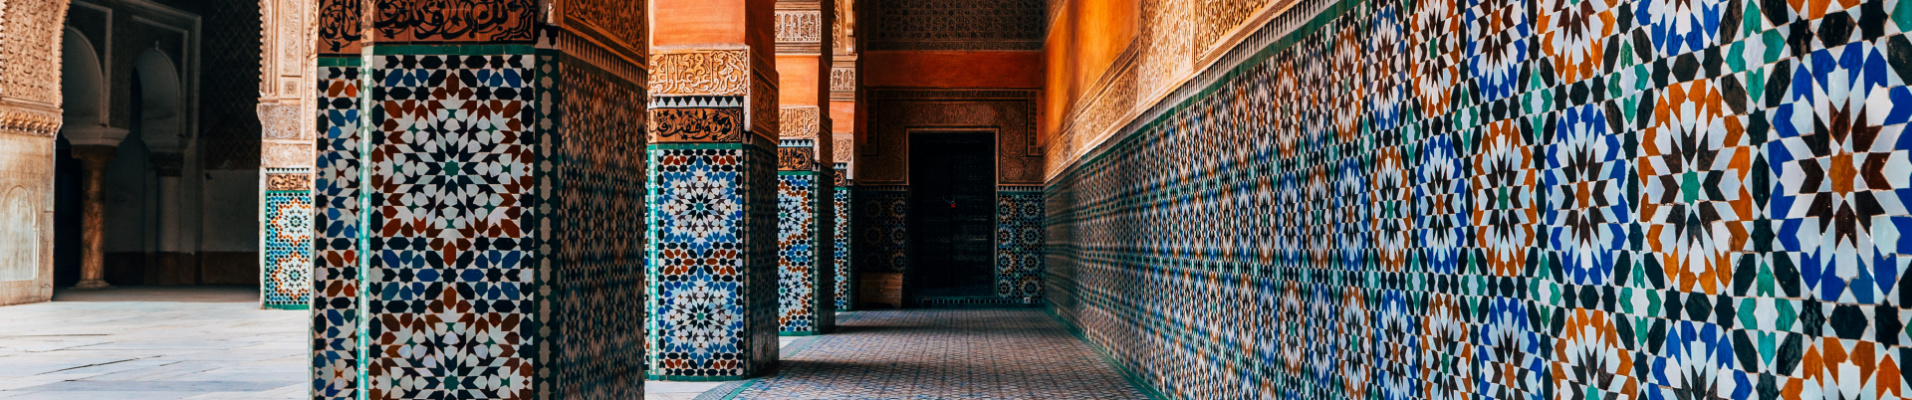 marrakech-maroc